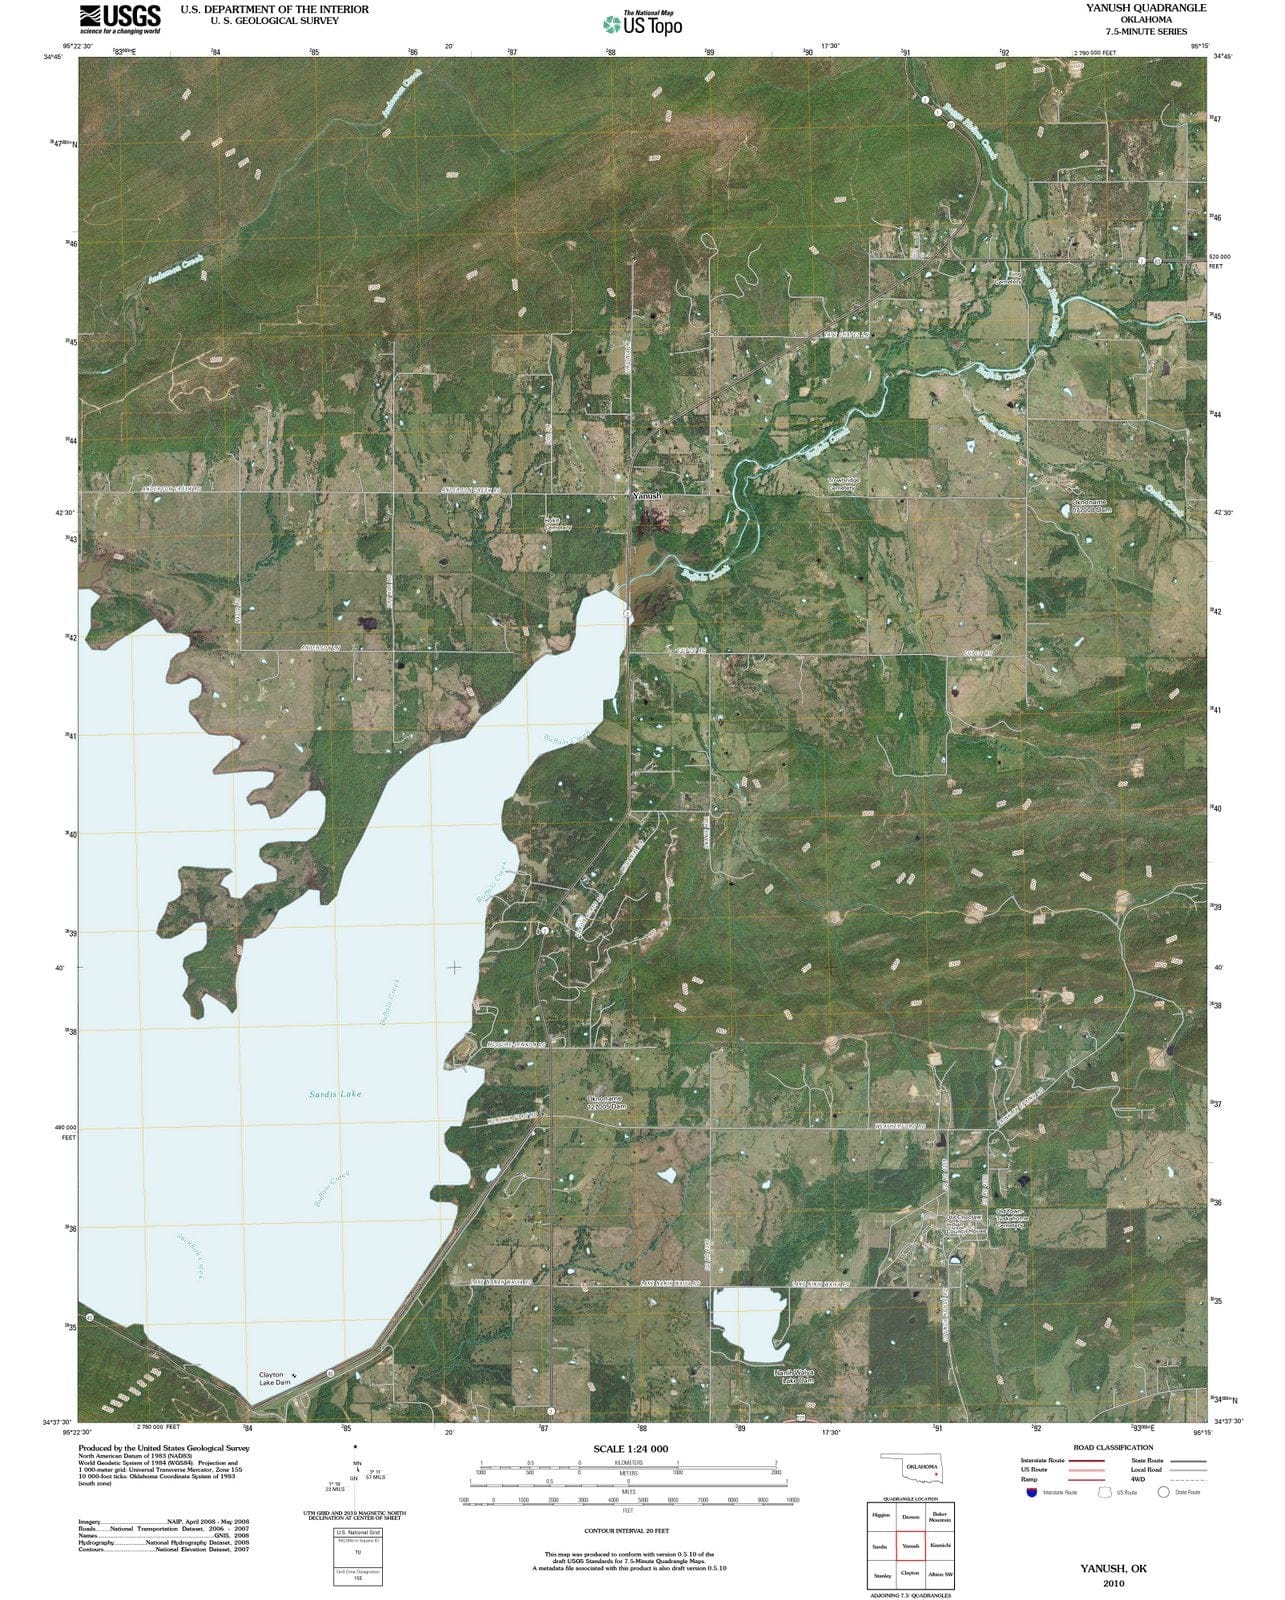 2010 Yanush, OK - Oklahoma - USGS Topographic Map